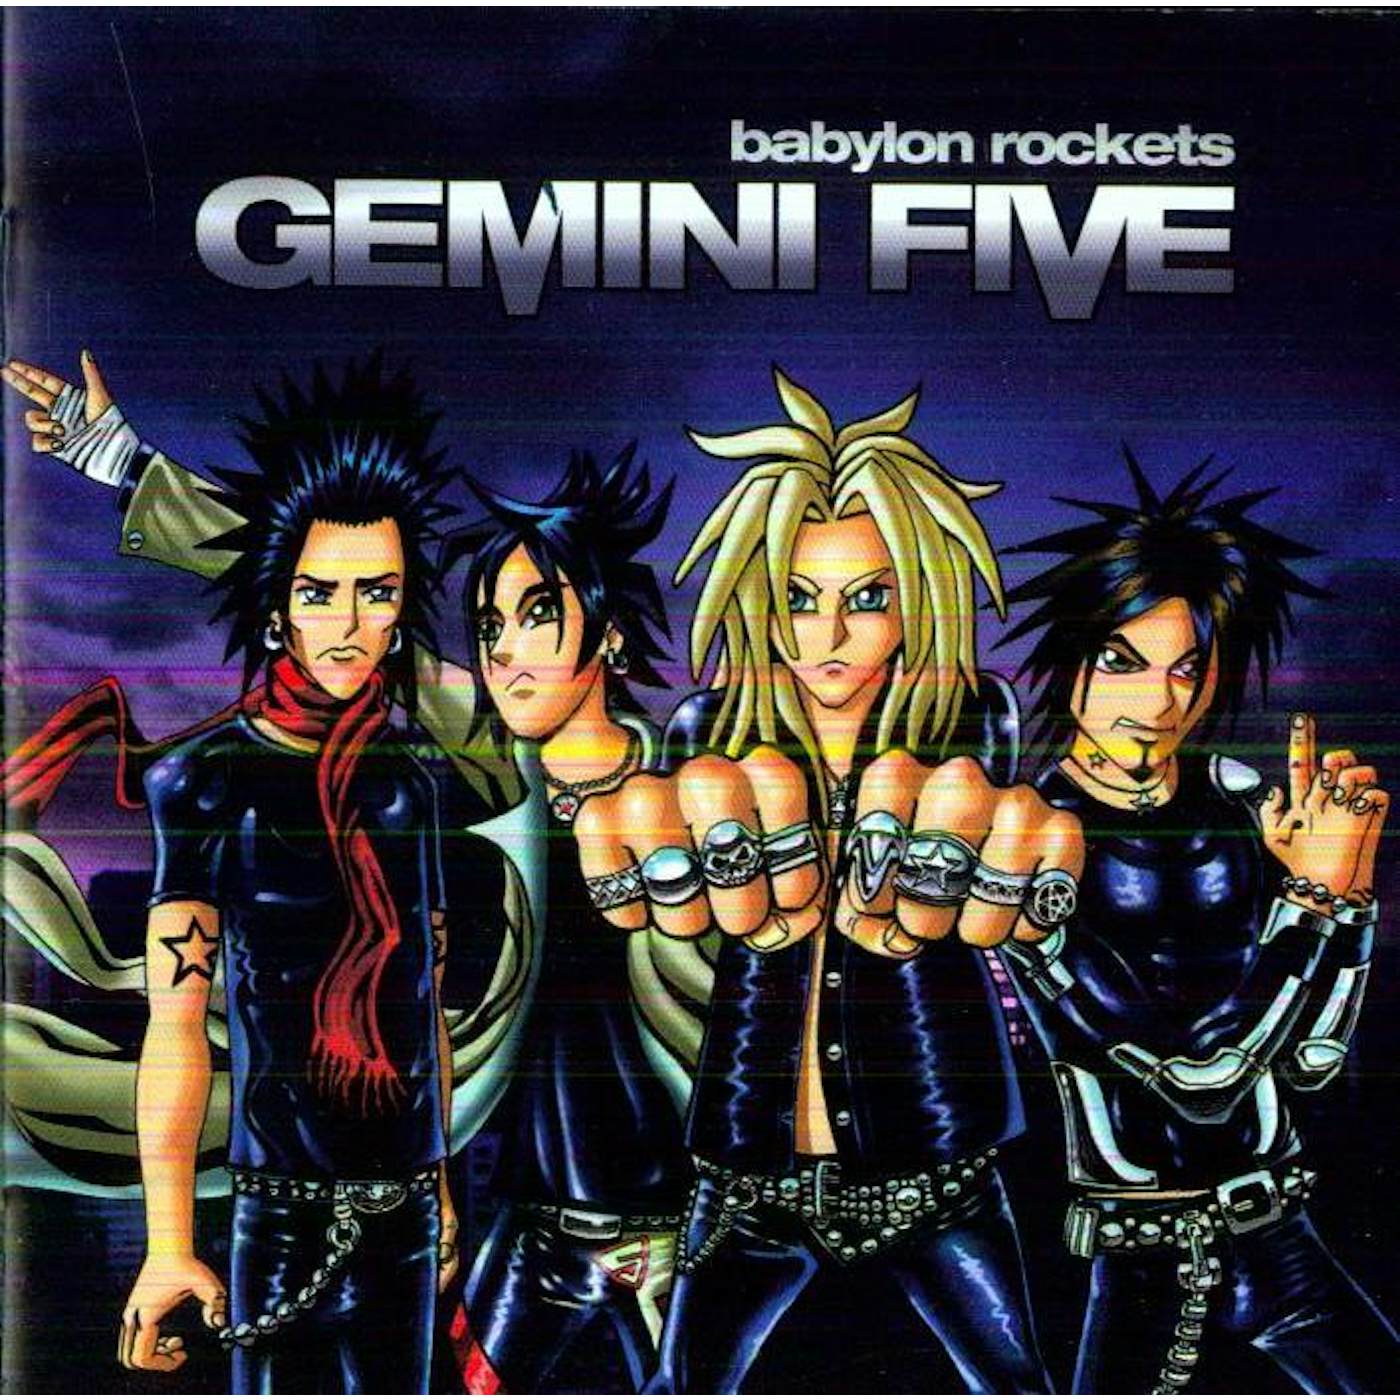 Gemini Five BABYLON ROCKETS CD